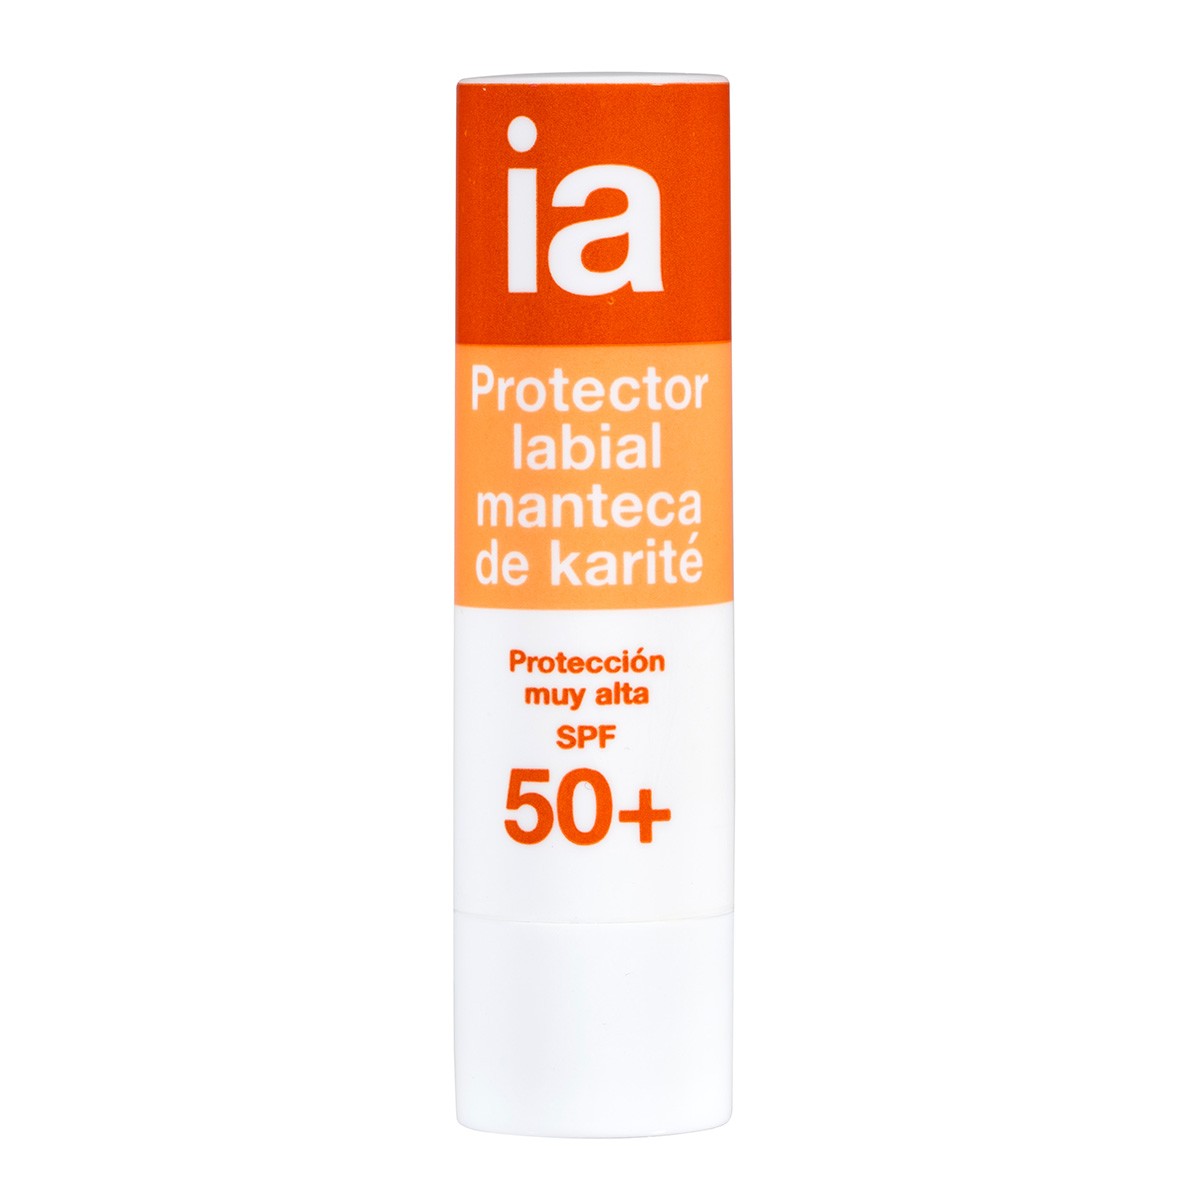 Interapothek protector labial manteca de karite spf 50+